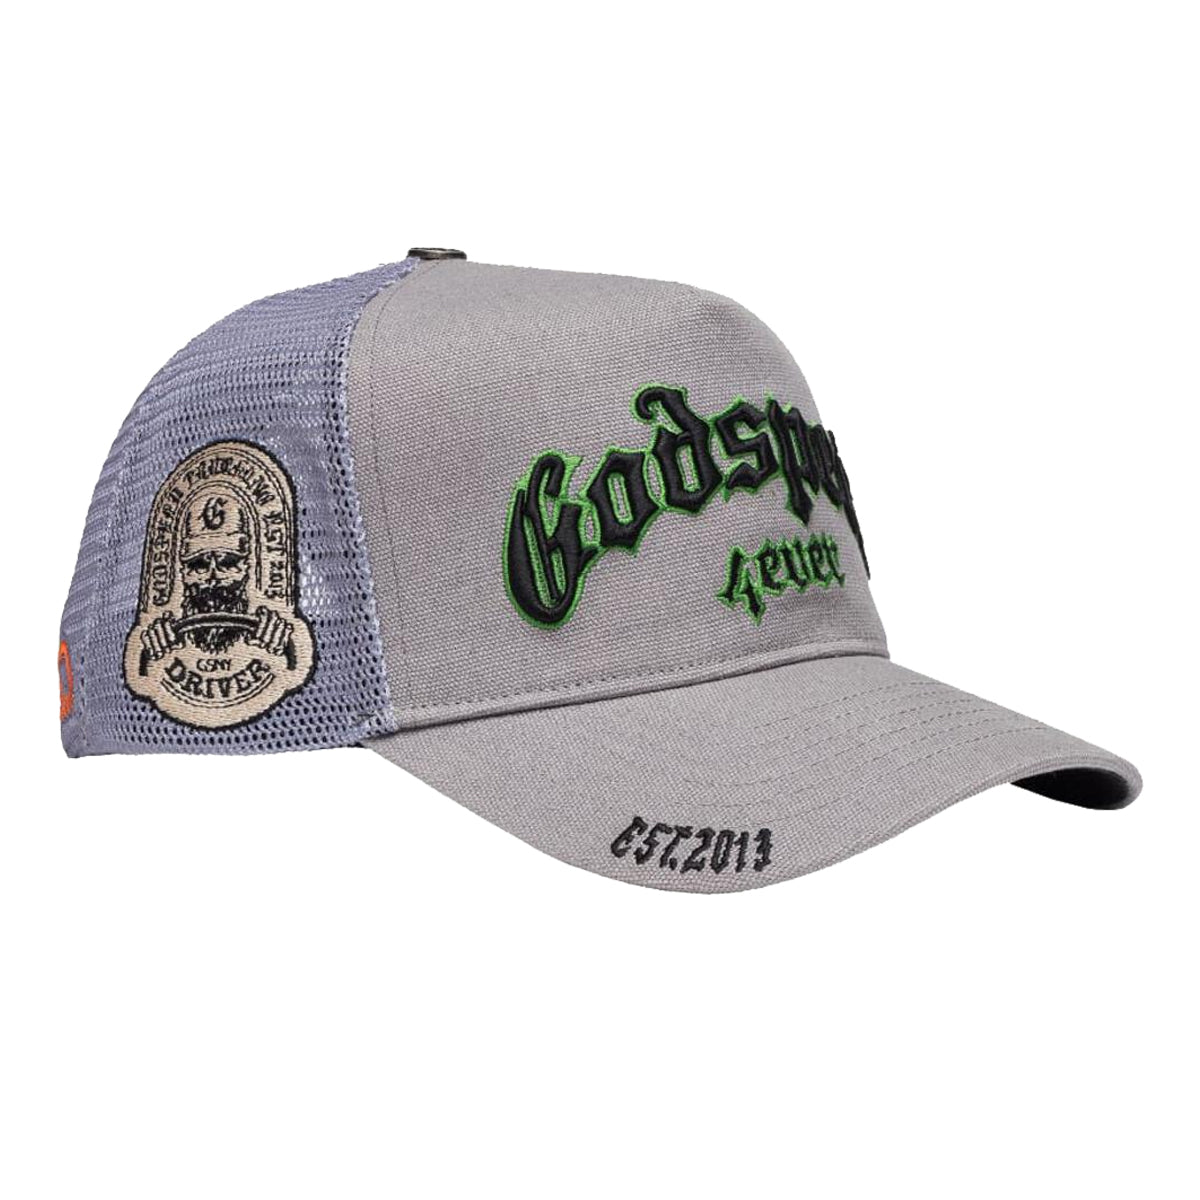 Godspeed Unisex Forever Trucker Hat Grey/Green